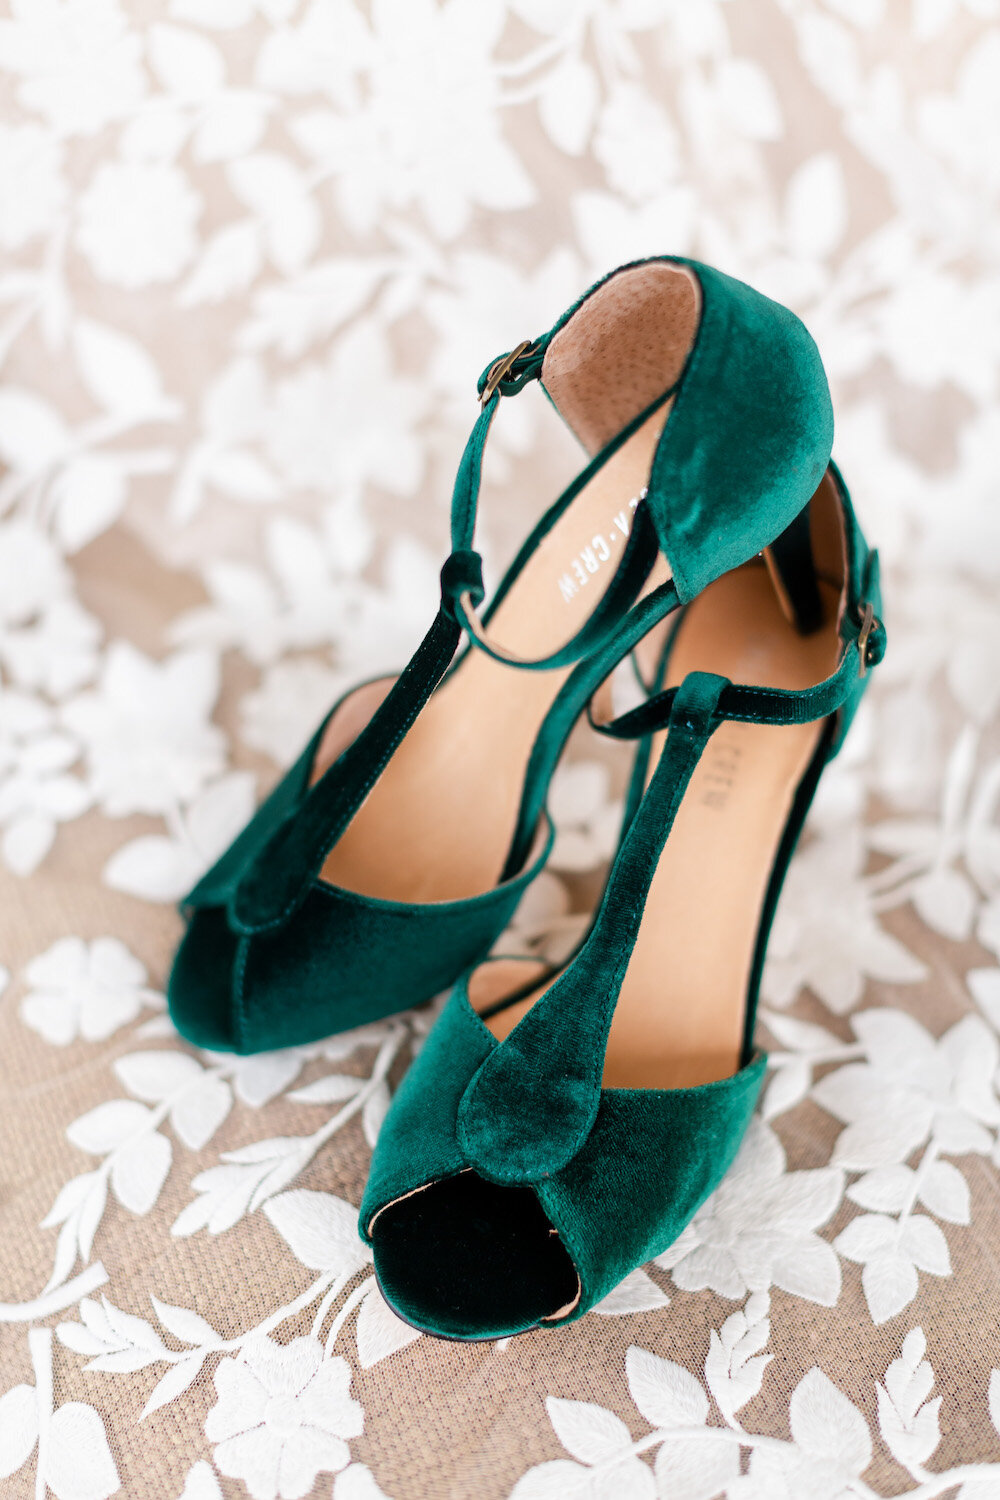 Emerald Shoe Detail Lambertville NJ Wedding